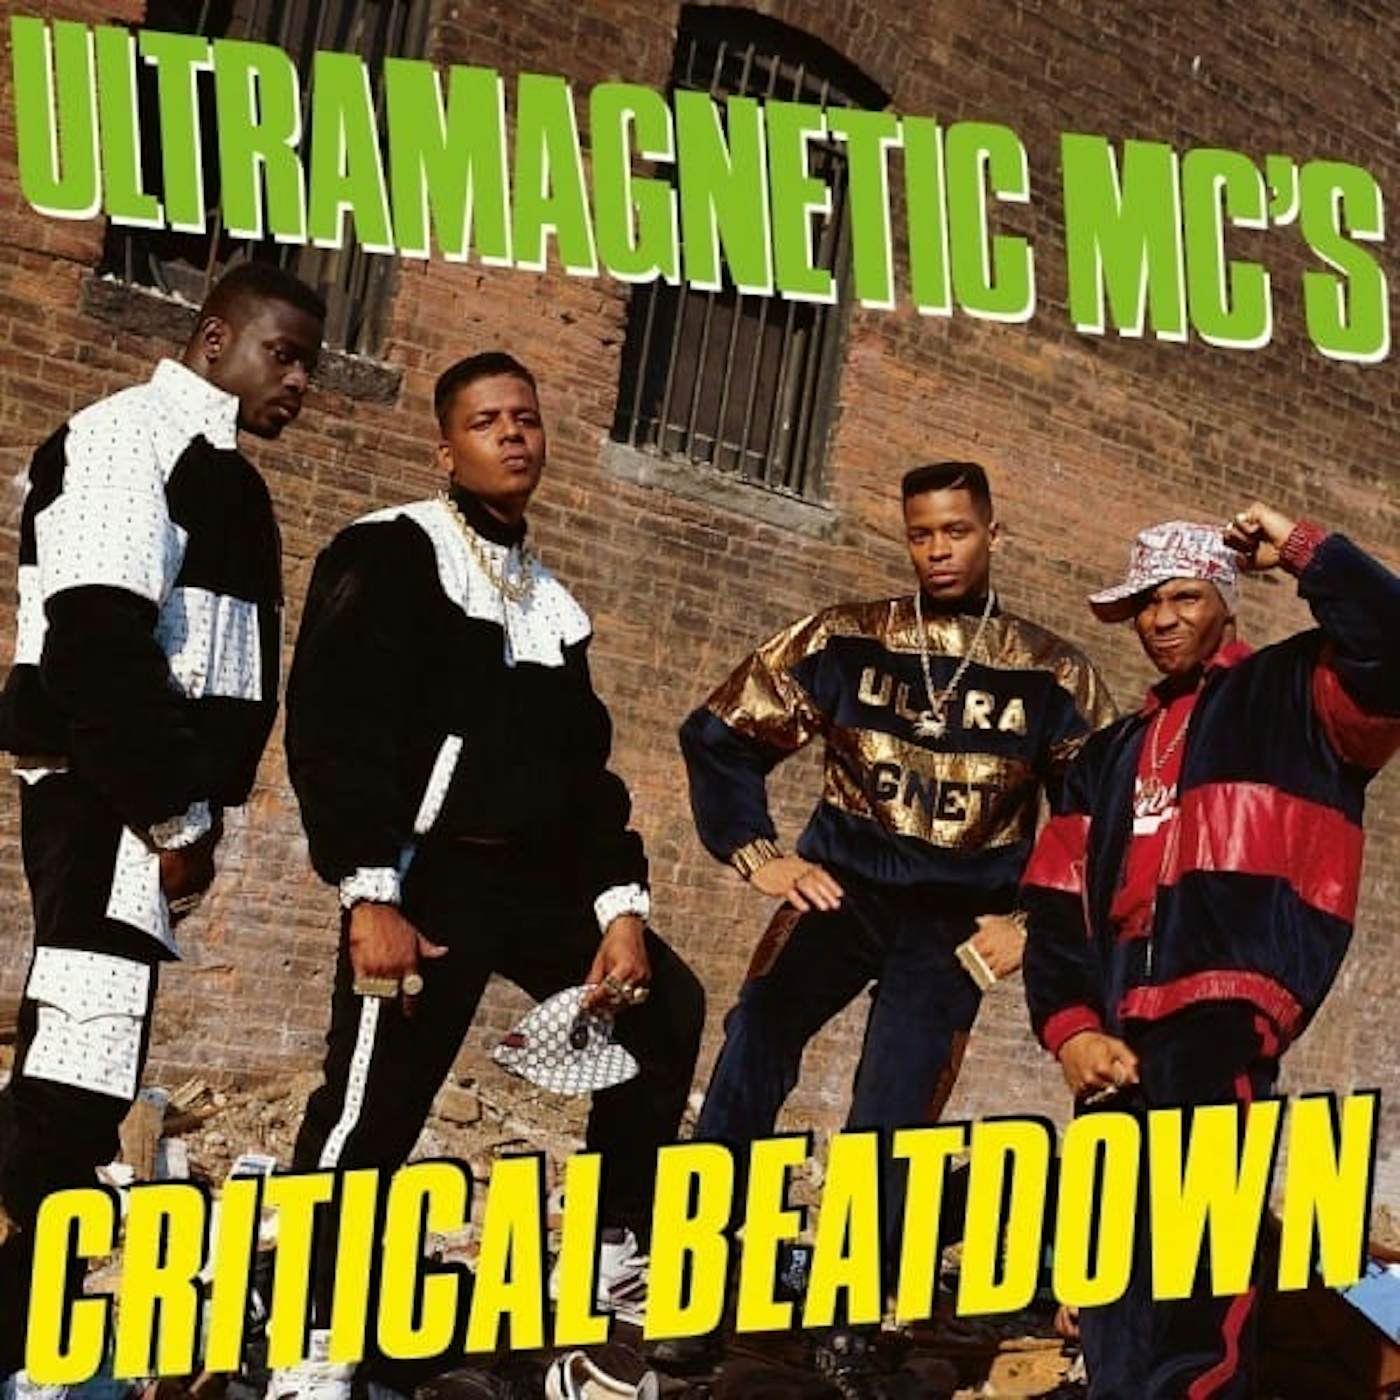 Ultramagnetic MC's Critical Beatdown Vinyl Record